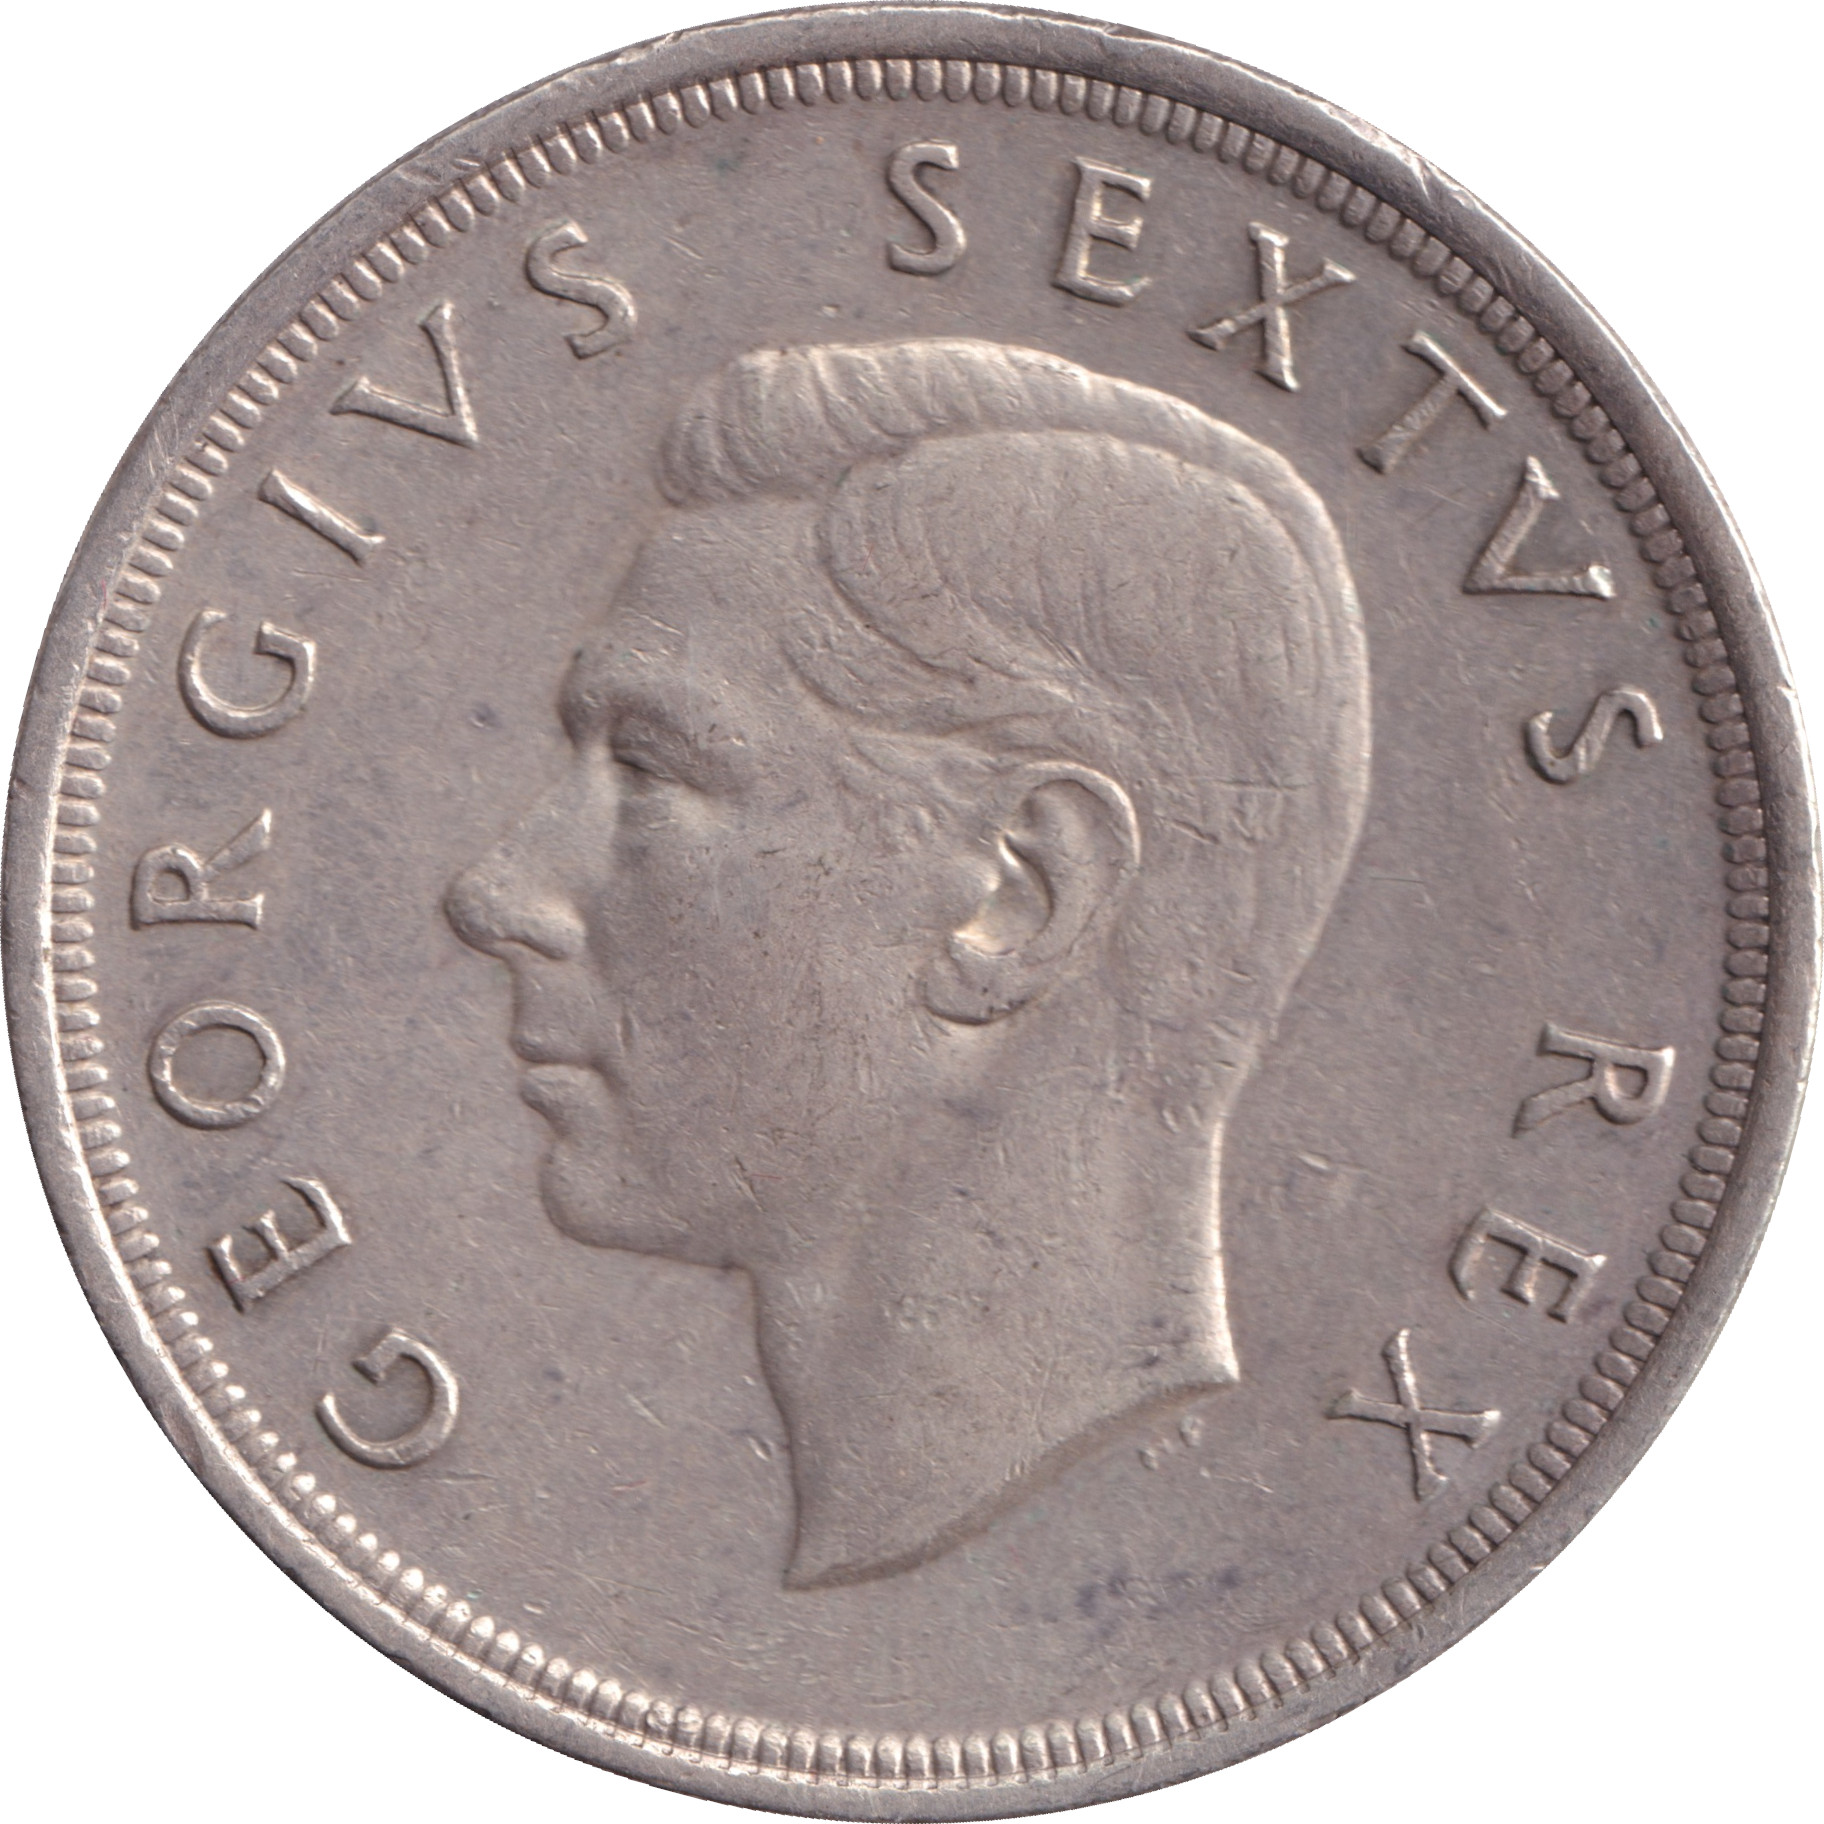 5 shillings - George VI